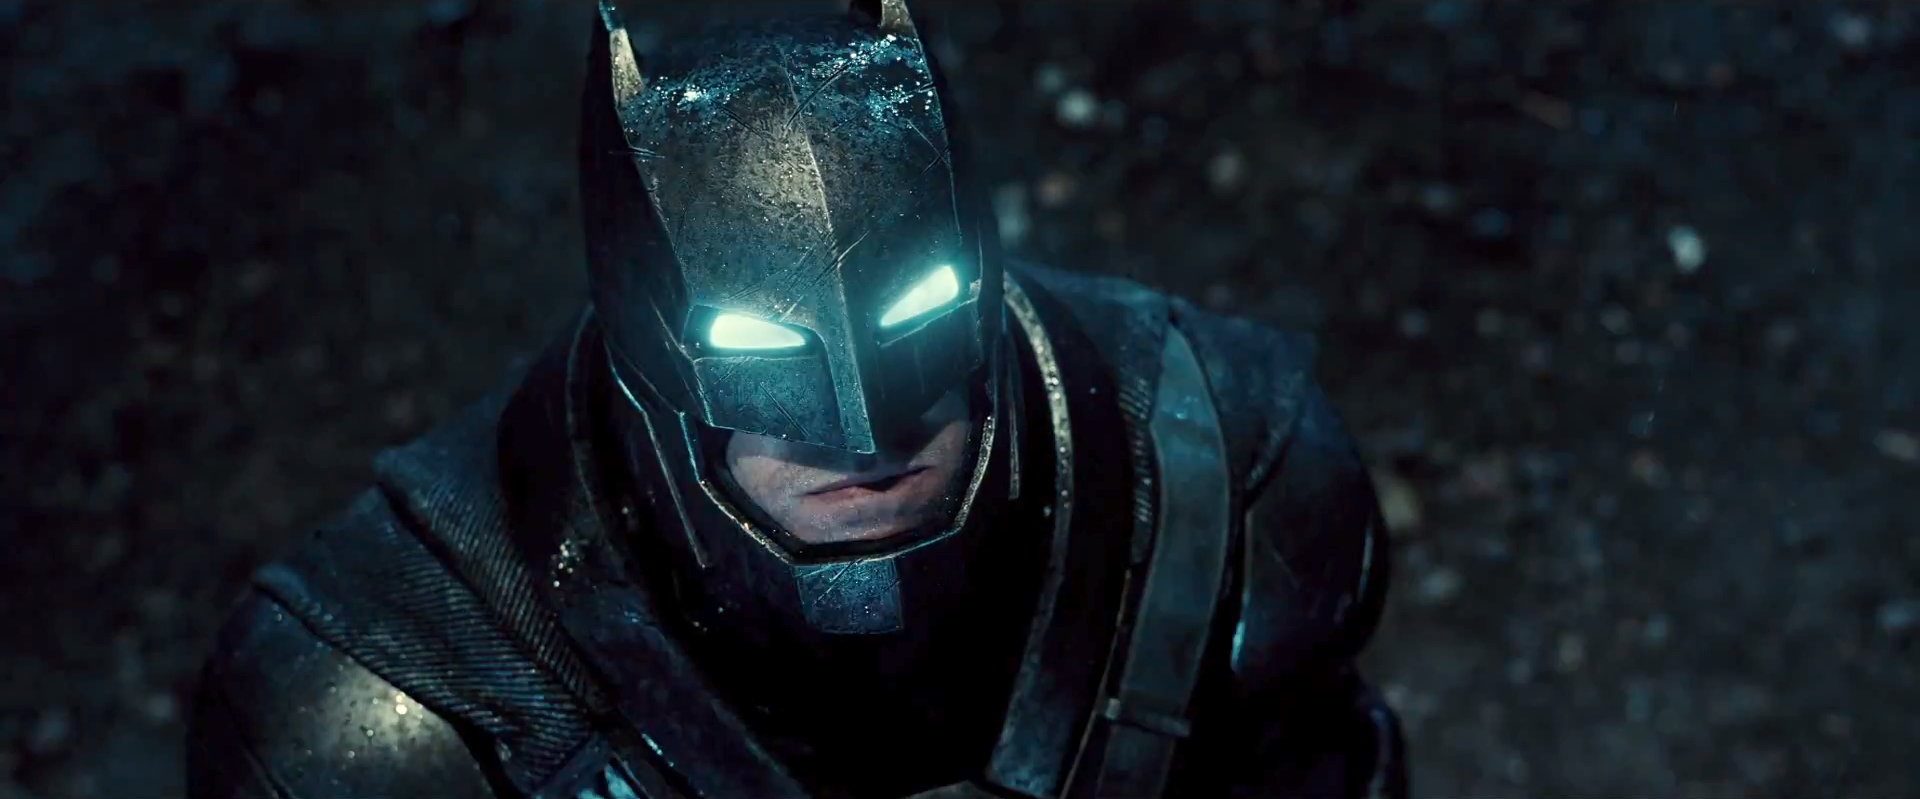 Ben Affleck Set For New Batman Trilogy With Warner Bros - The Tracking Board